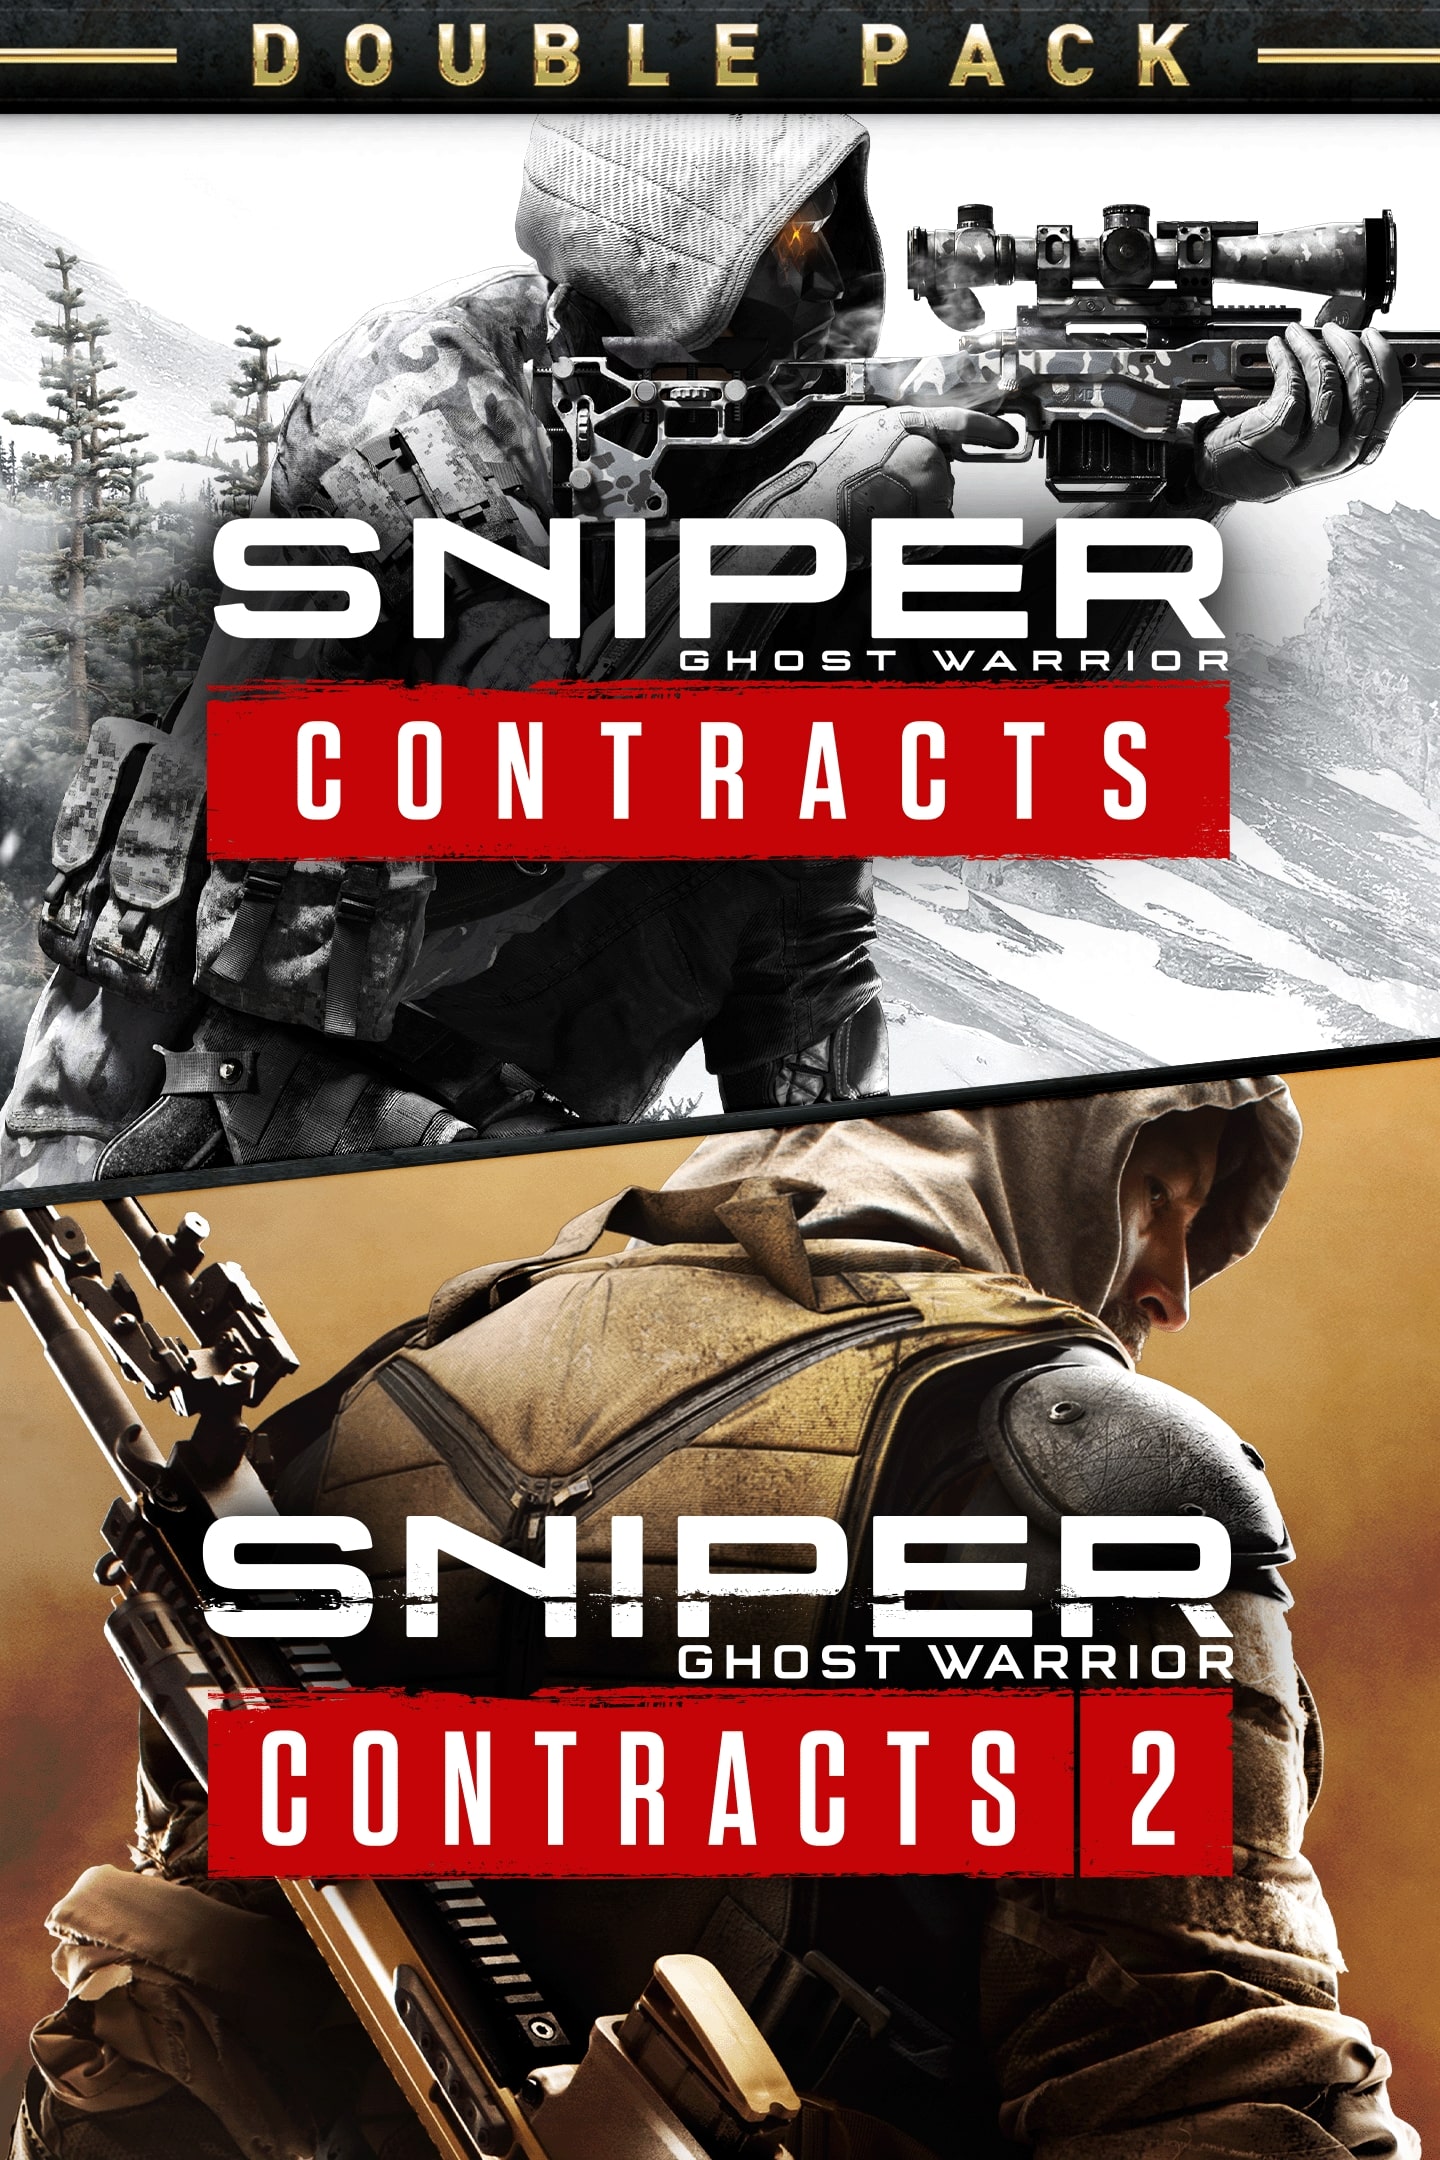 Fem skille sig ud Stirre Sniper Ghost Warrior Contracts 2